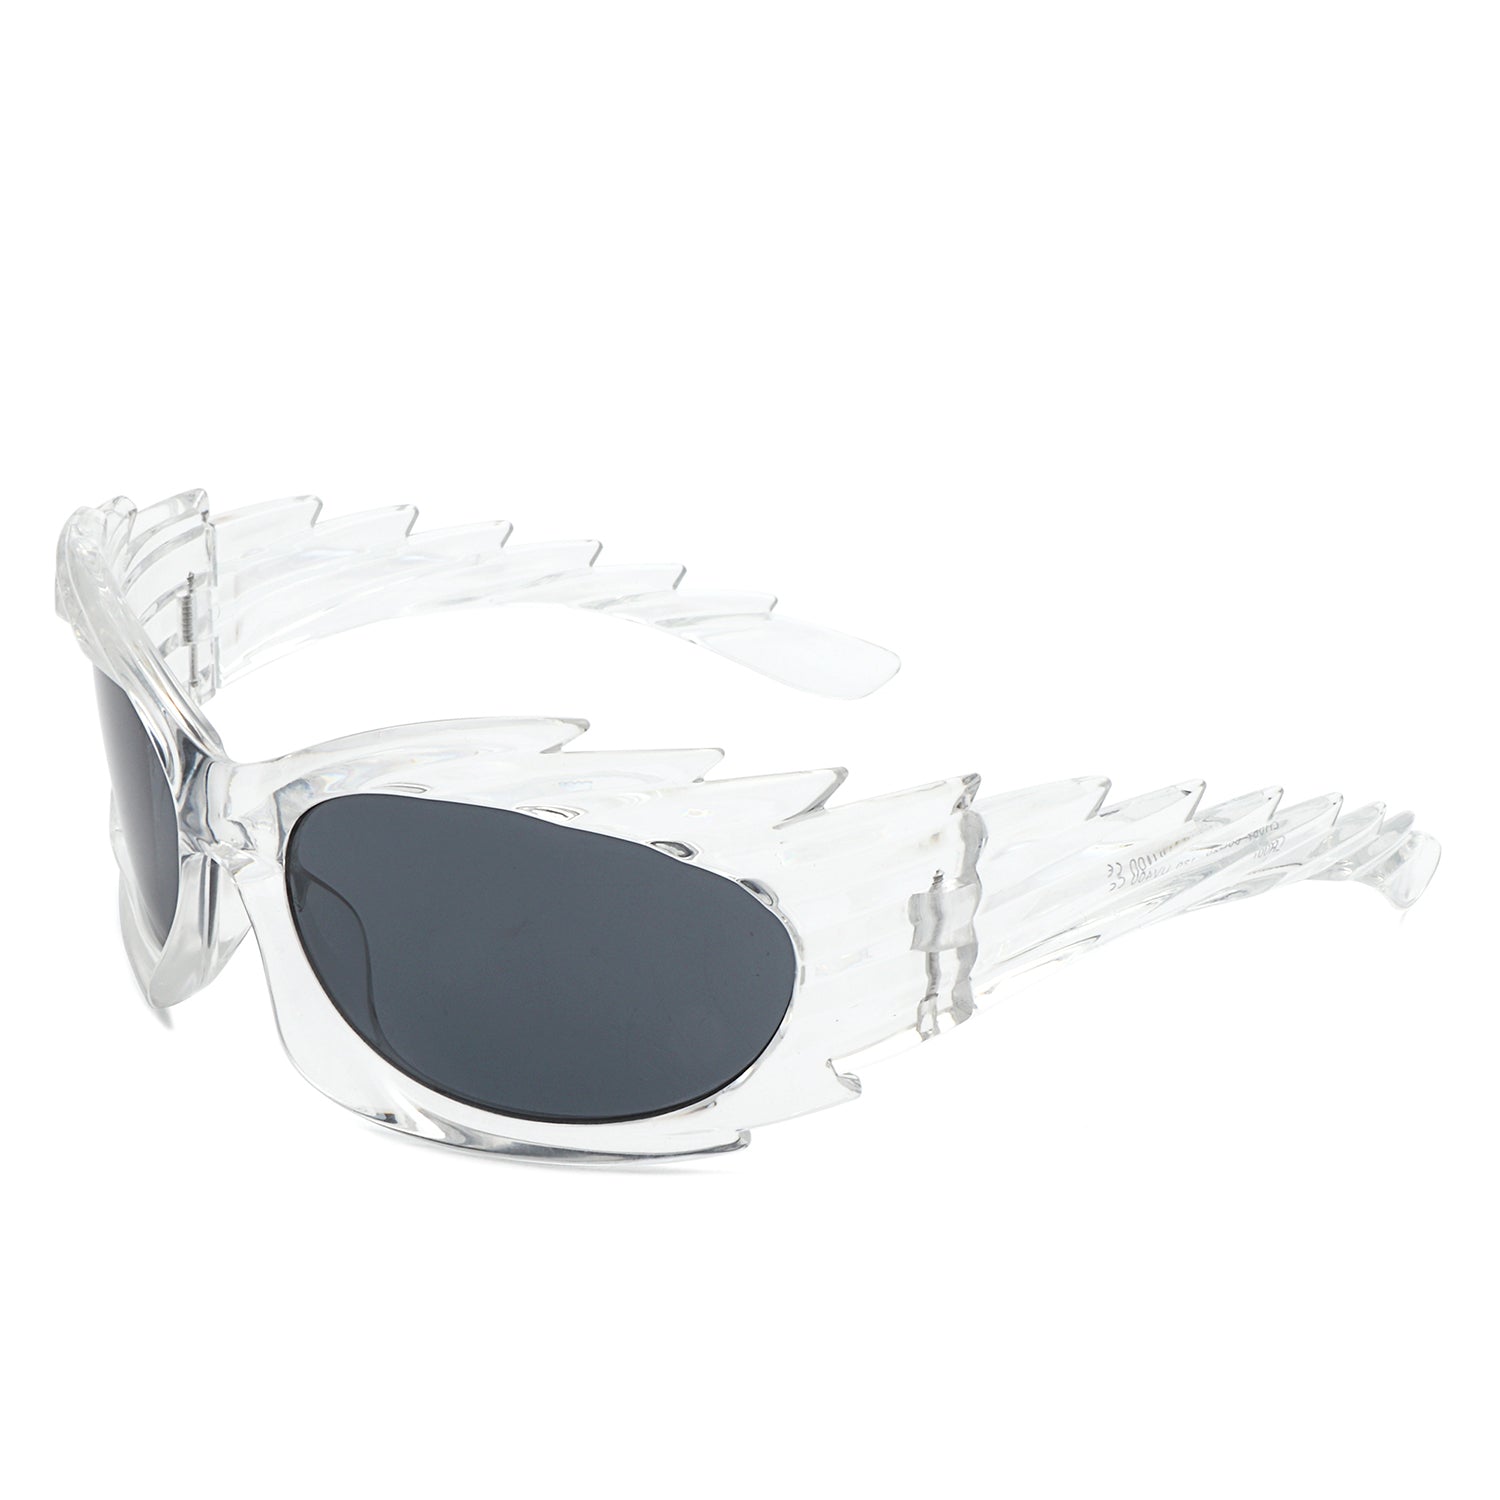 HS2136-1 - Wrap Around Oval Spike Oversize Fashion Wholesale Sunglasses